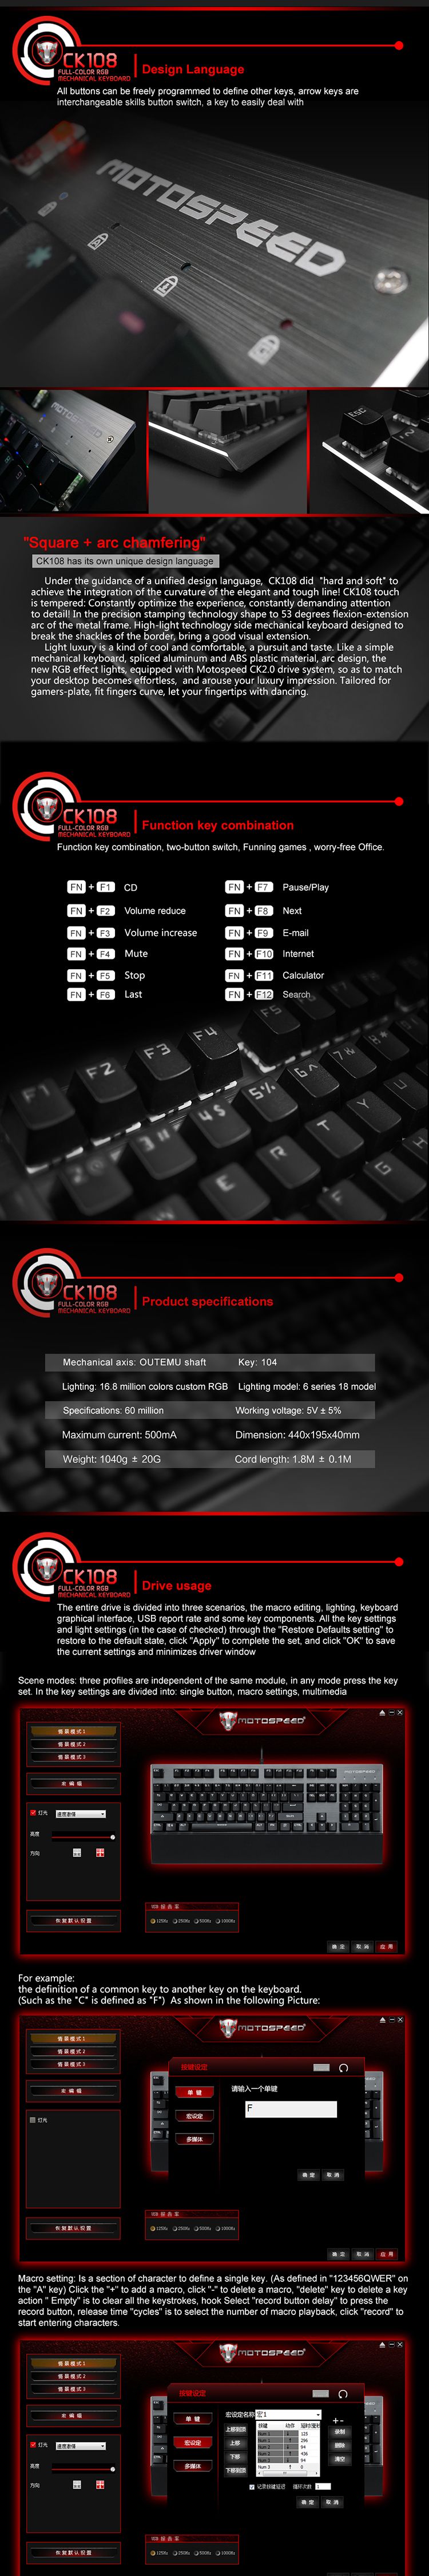 Motospeed-CK108-104-Keys-Blue-Switch-RGB-Backlit-Mechanical-Gaming-Wired-Keyboard-1134661